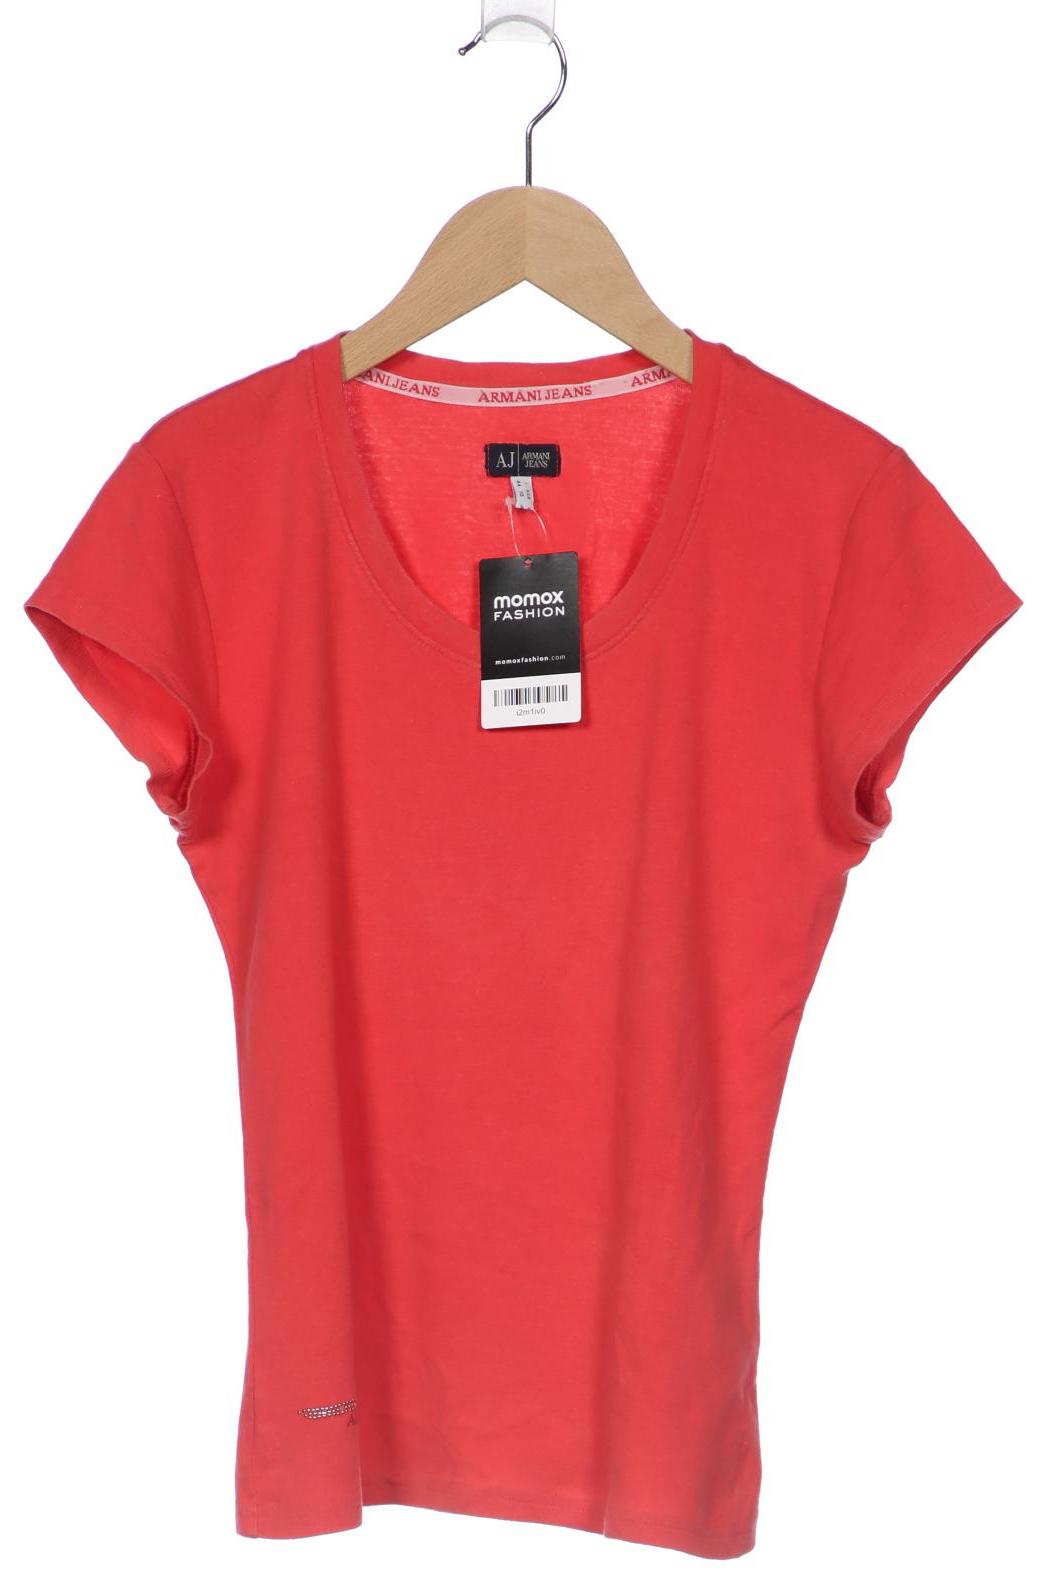 Armani Jeans Damen T-Shirt, rot von Armani Jeans